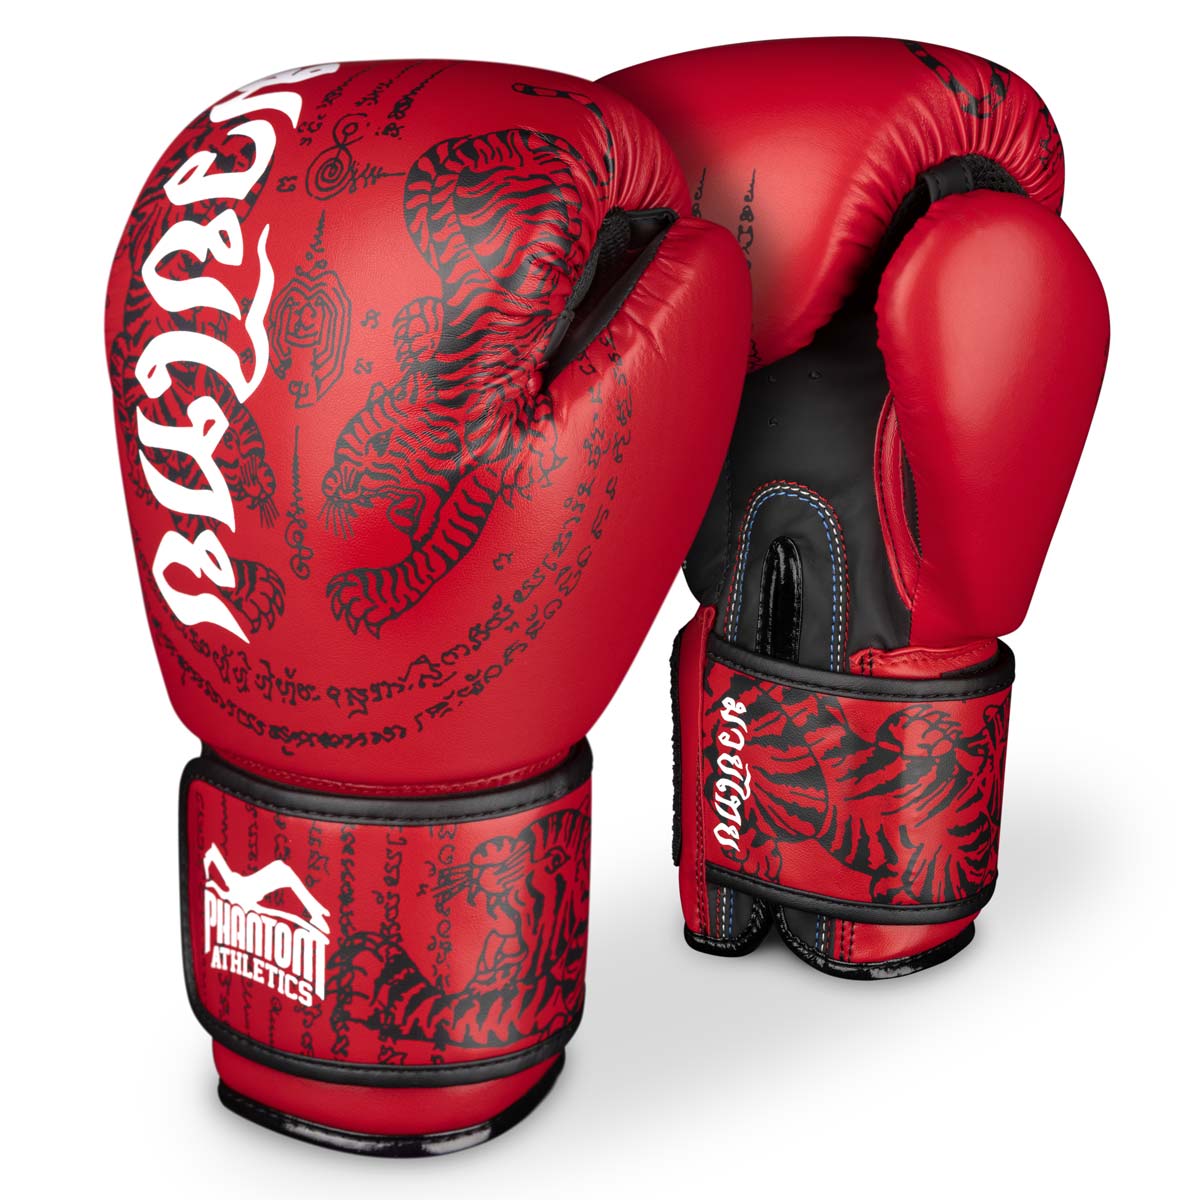 Phantom Muay Thai boxing gloves with Thai print in red/black.